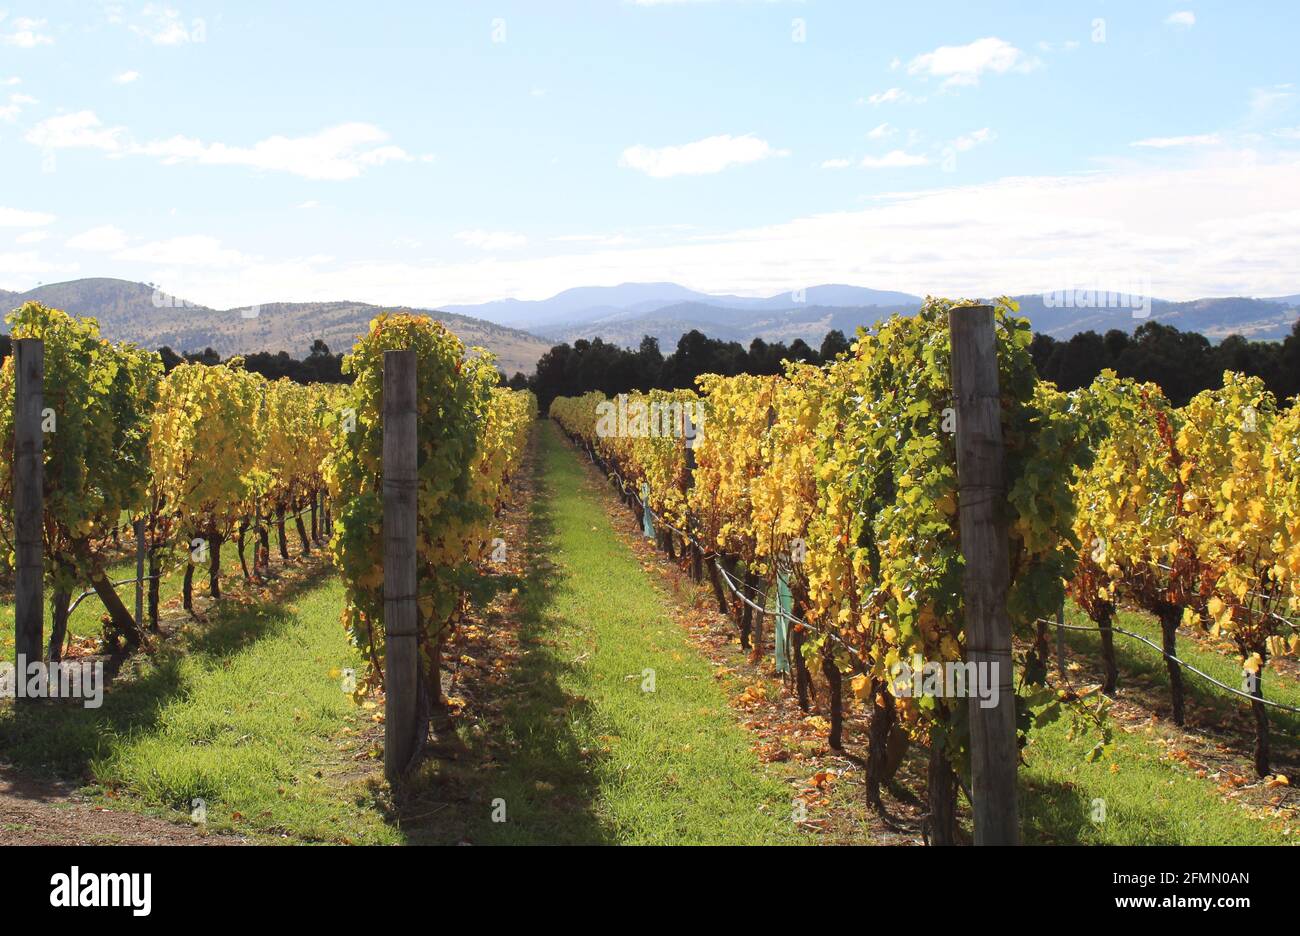 Hobart Winery, Coal River Valley, Australian Vineyard, Autumn Image. Stockfoto